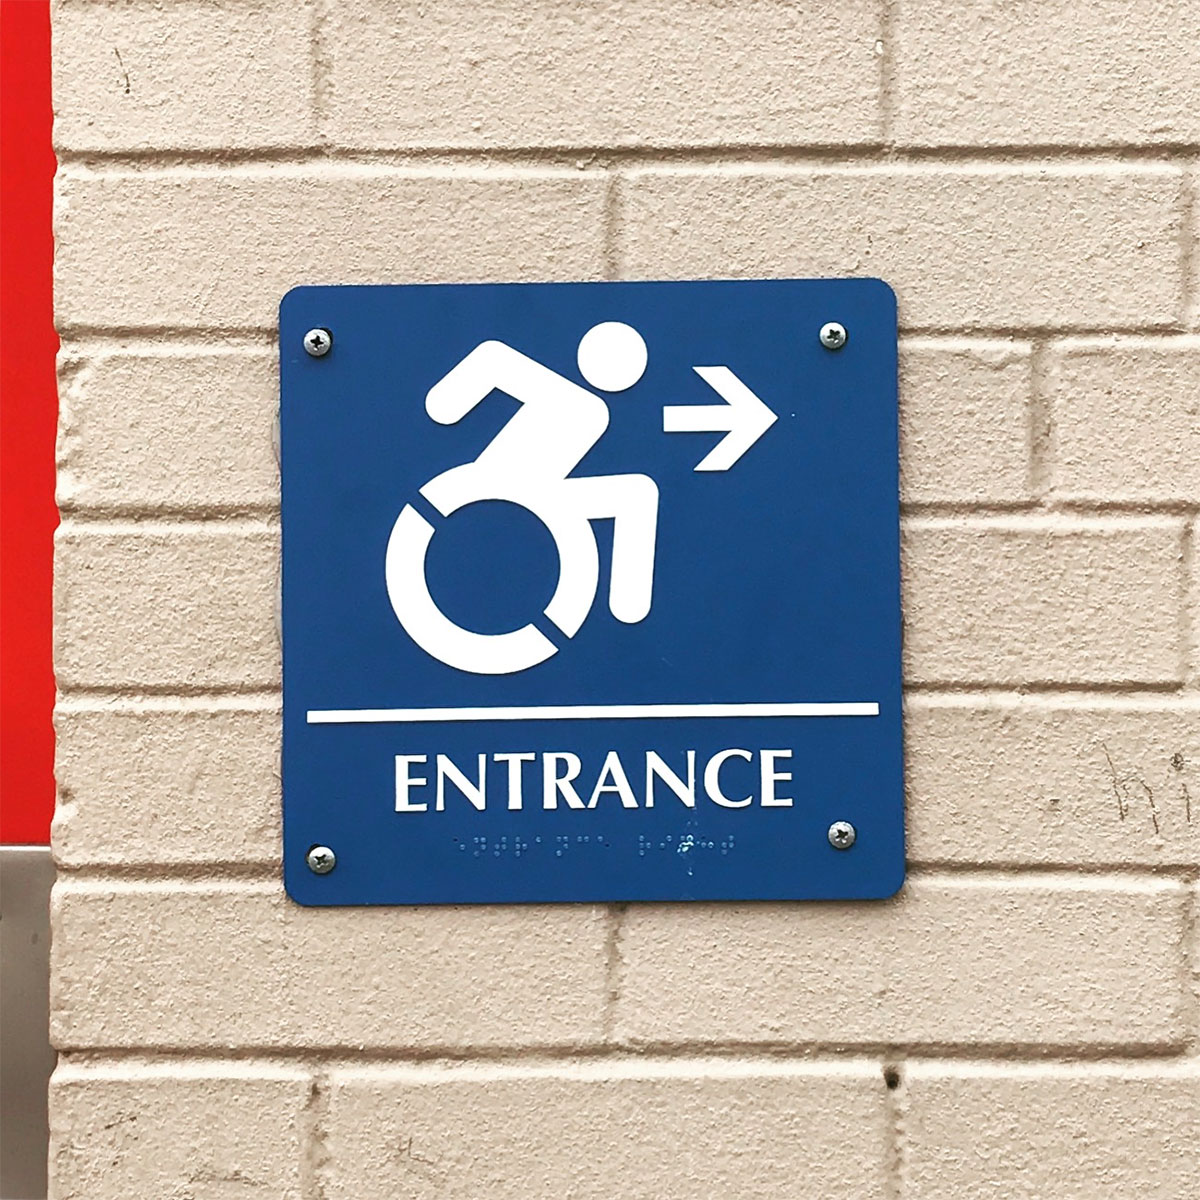 New wheelchair symbol